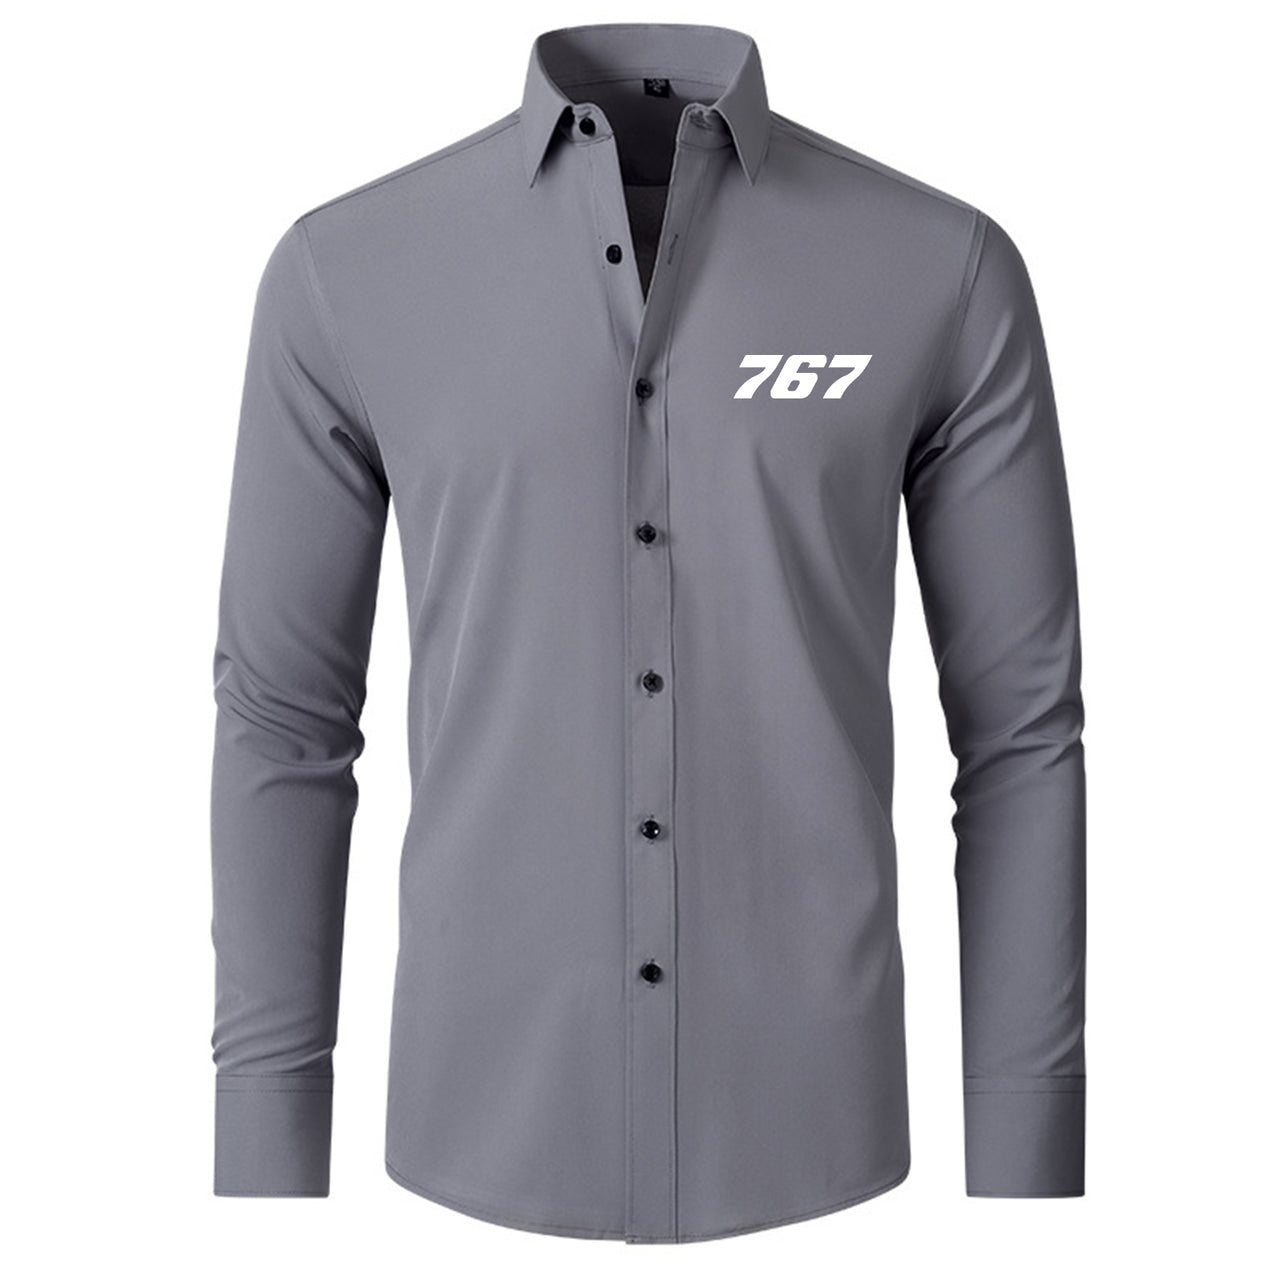 767 Flat Text Designed Long Sleeve Shirts